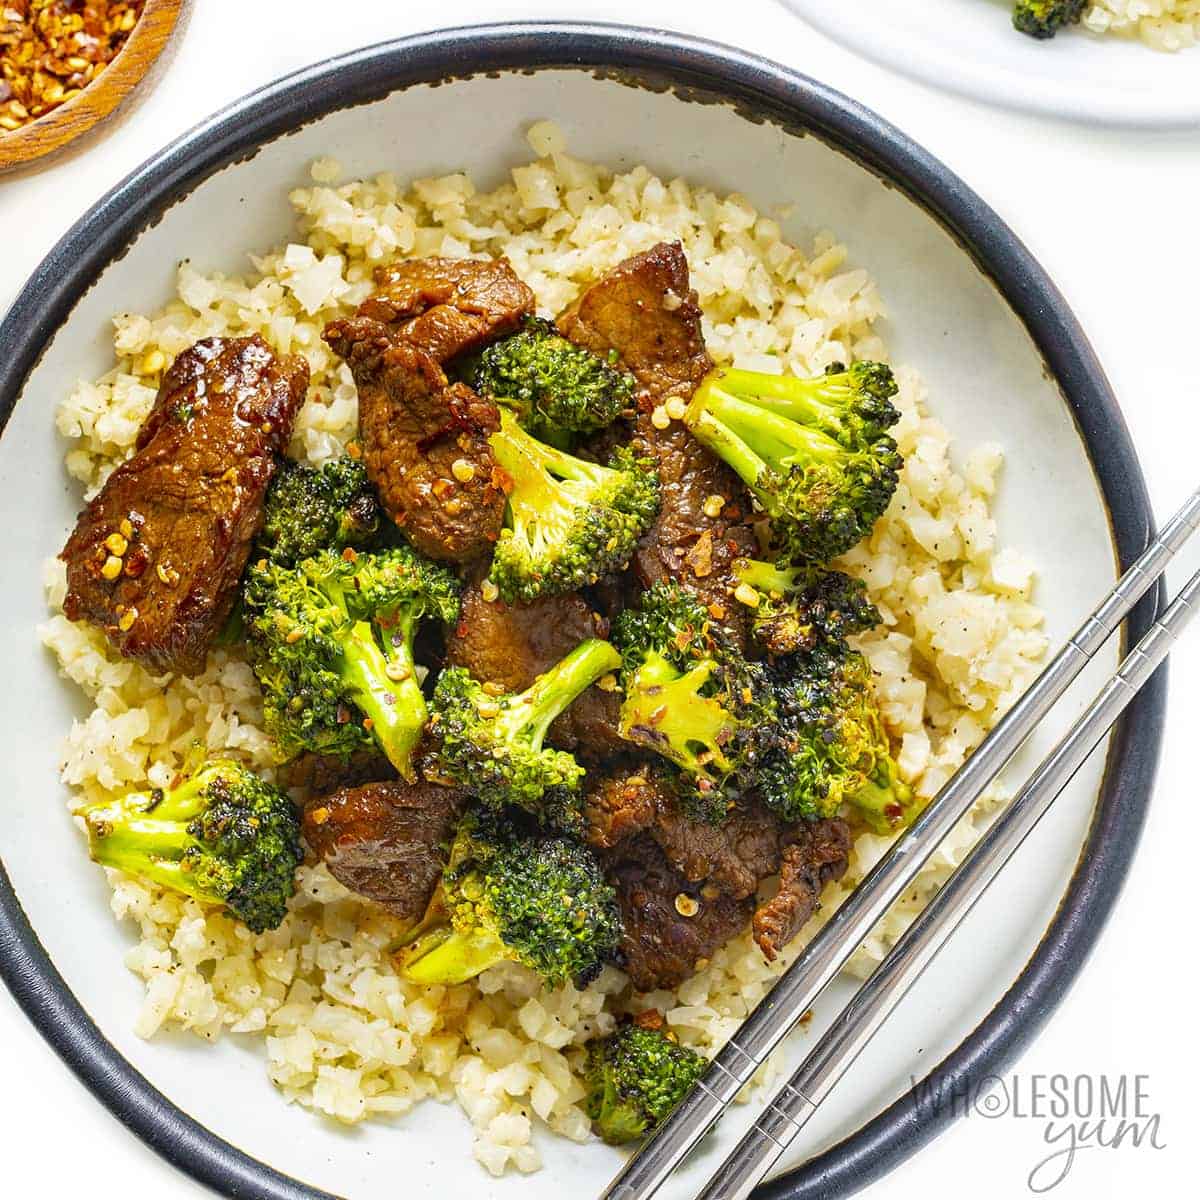 Keto beef and broccoli recipe over cauliflower rice.